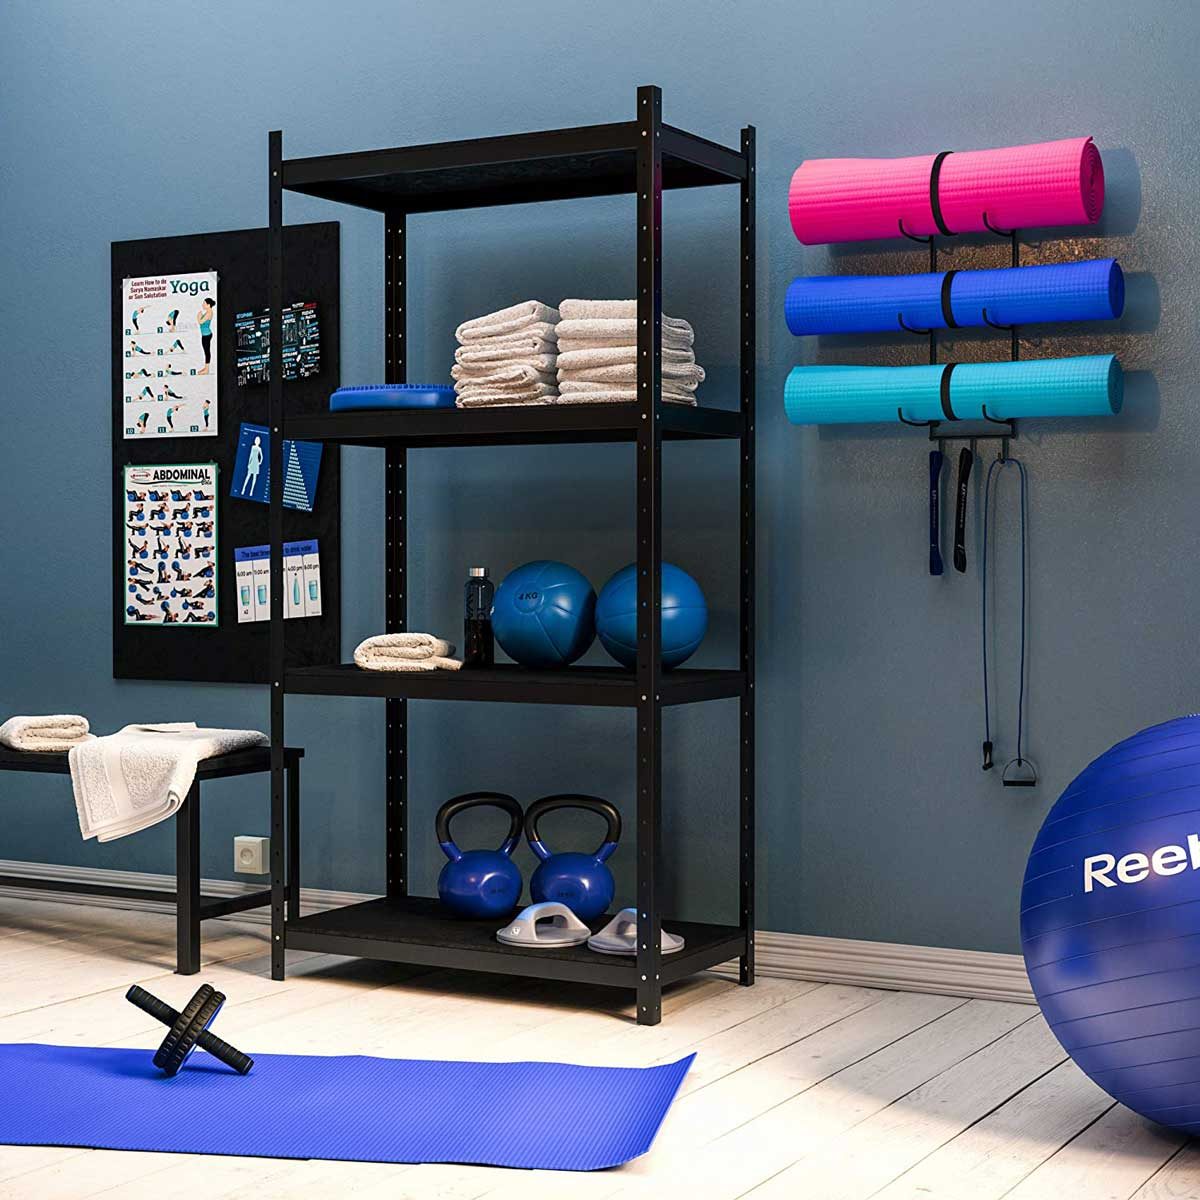 Yoga Mat Storage Rack Organizer Yoga Center Storage Shelf